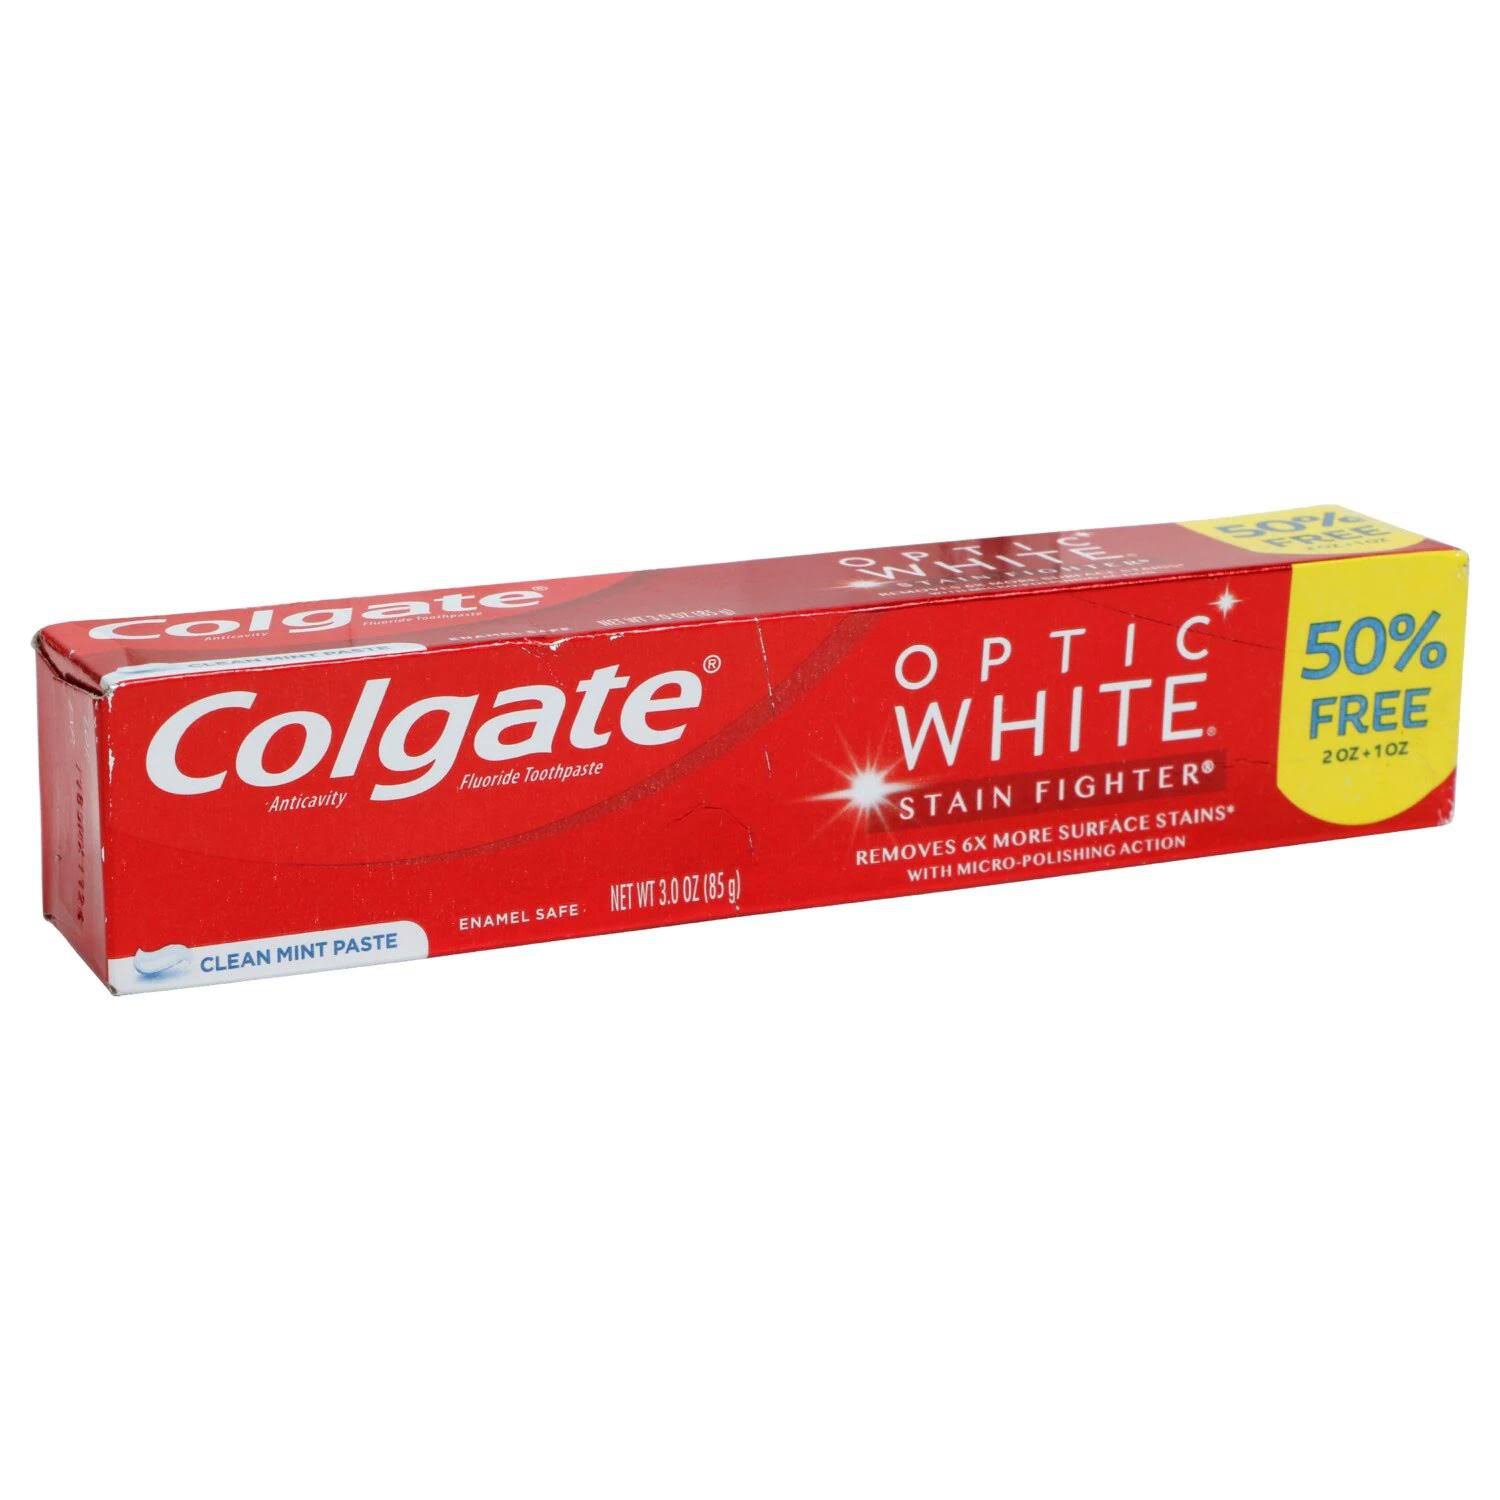 Colgate Optic White Toothpaste, 3 oz. Clean Mint